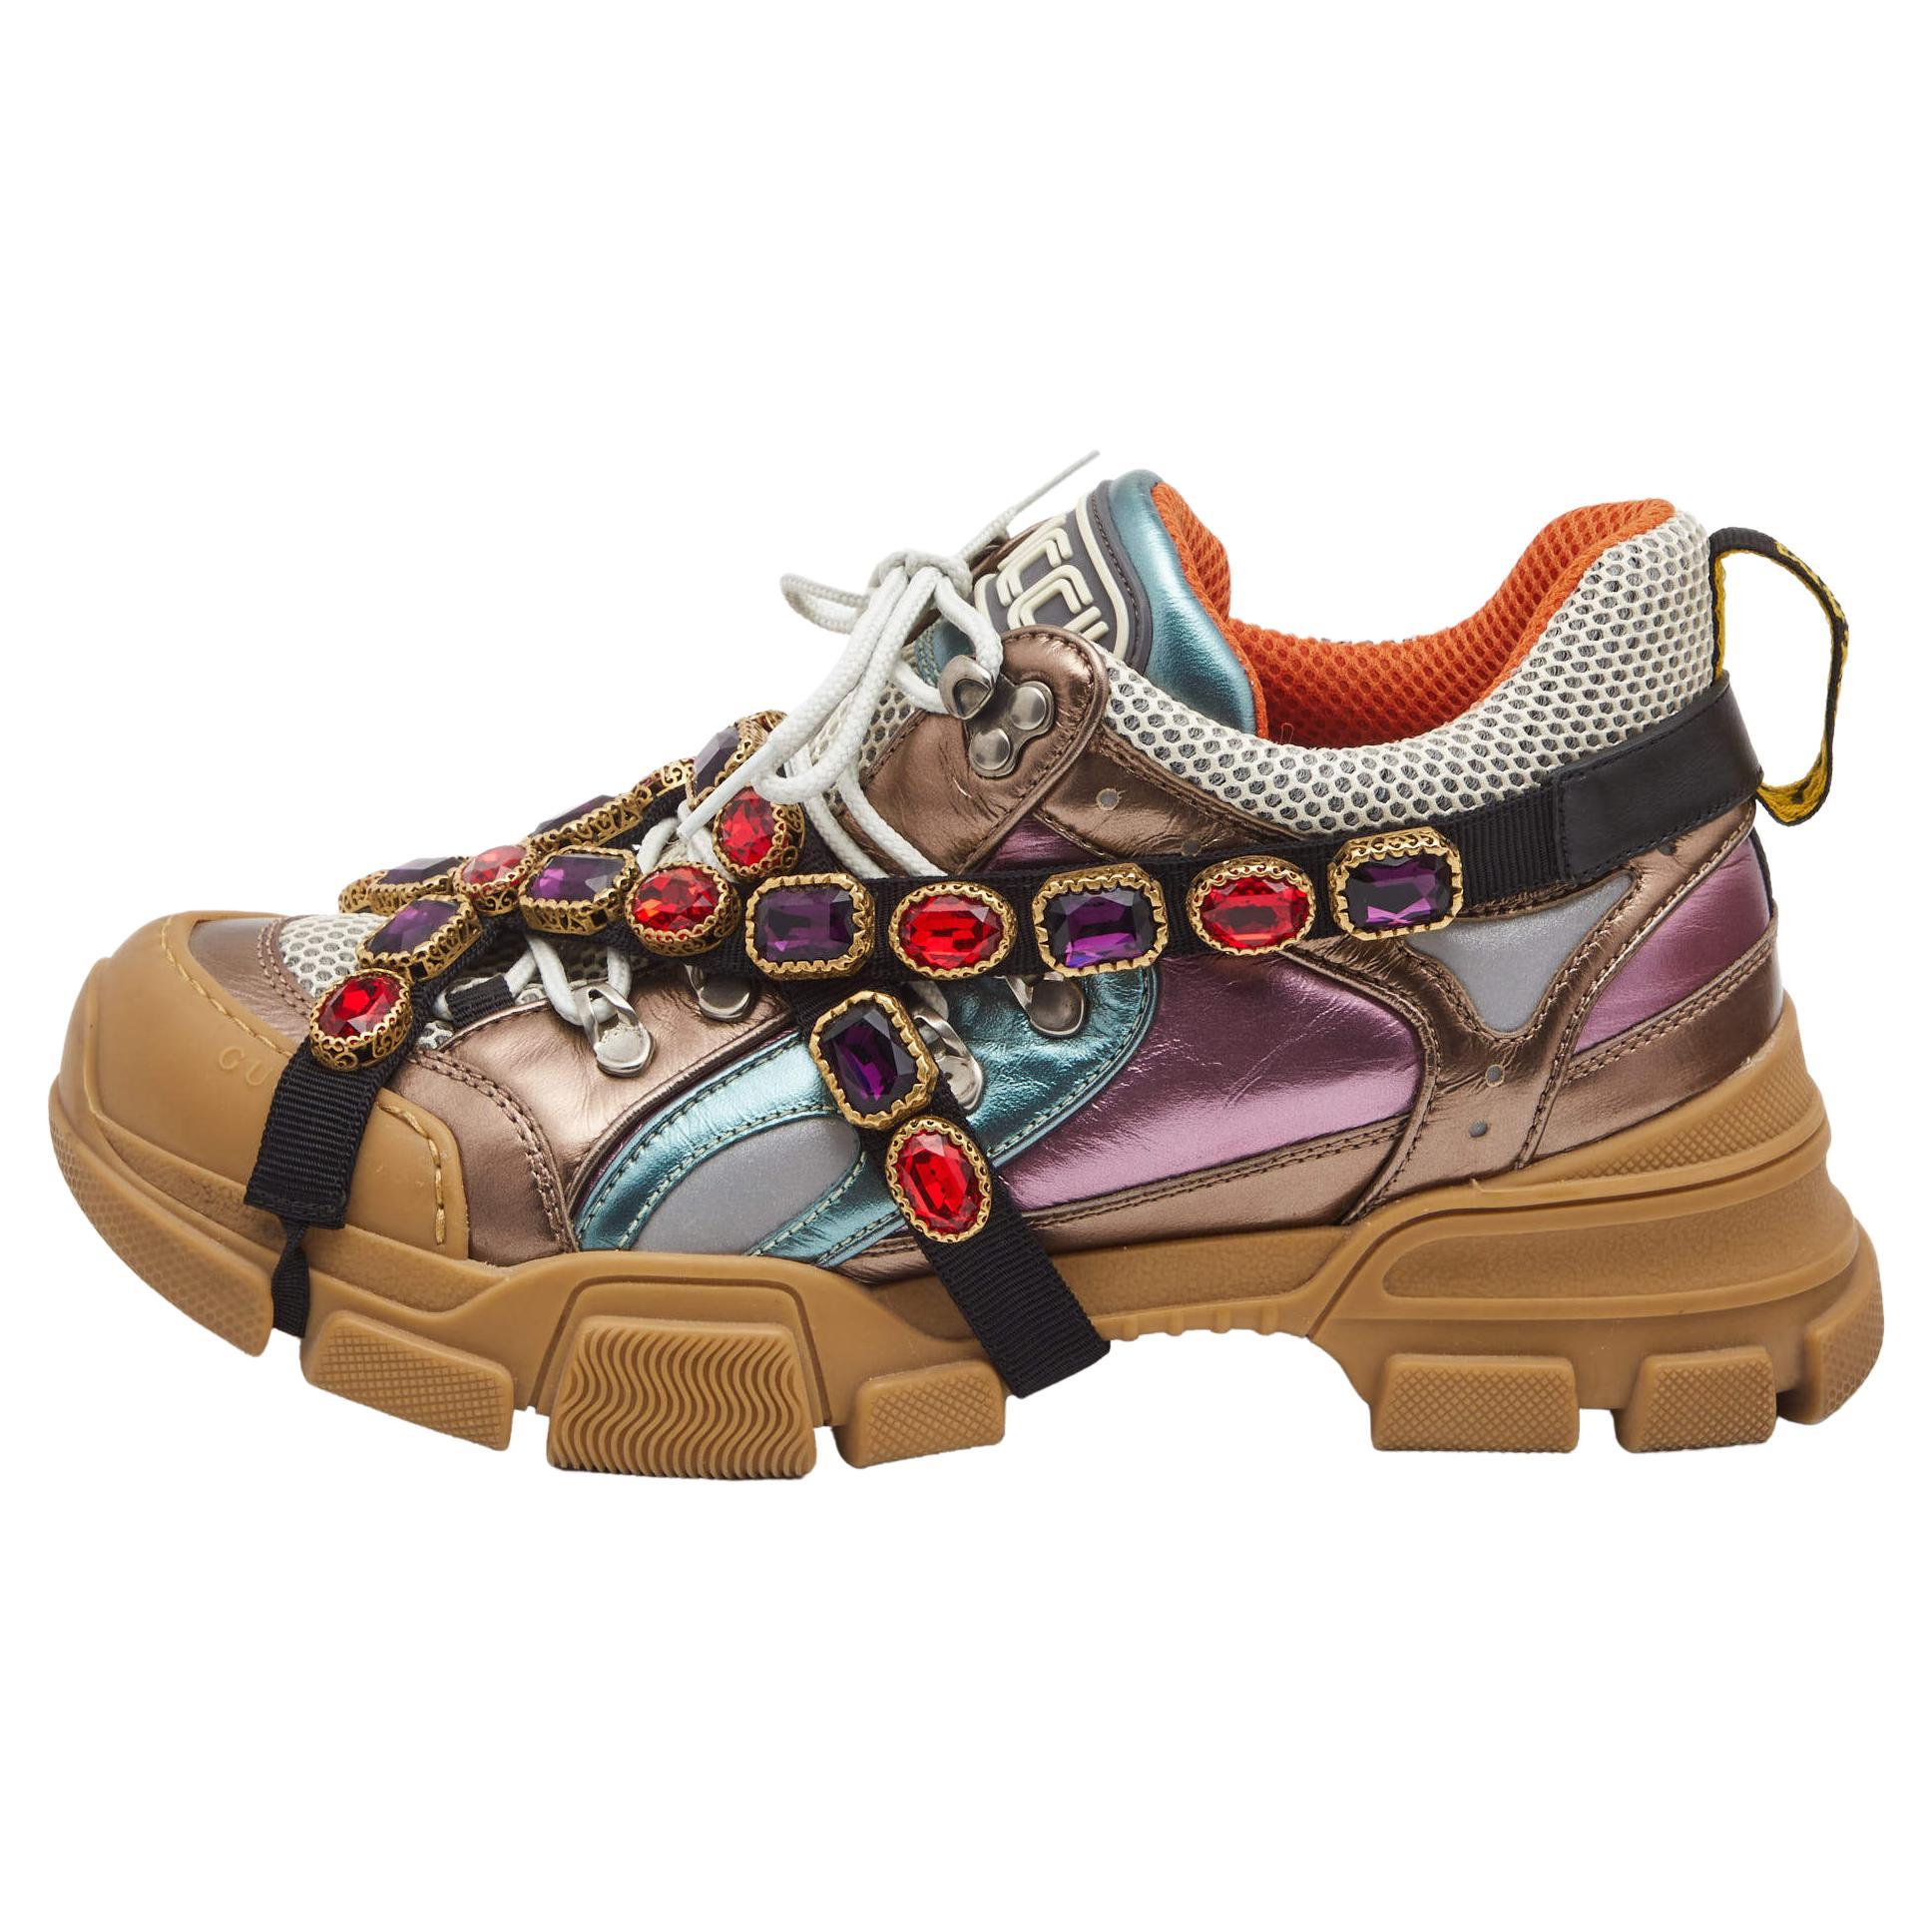 Gucci Multicolor Leather Flashtrek Reflective Sneakers Size 41